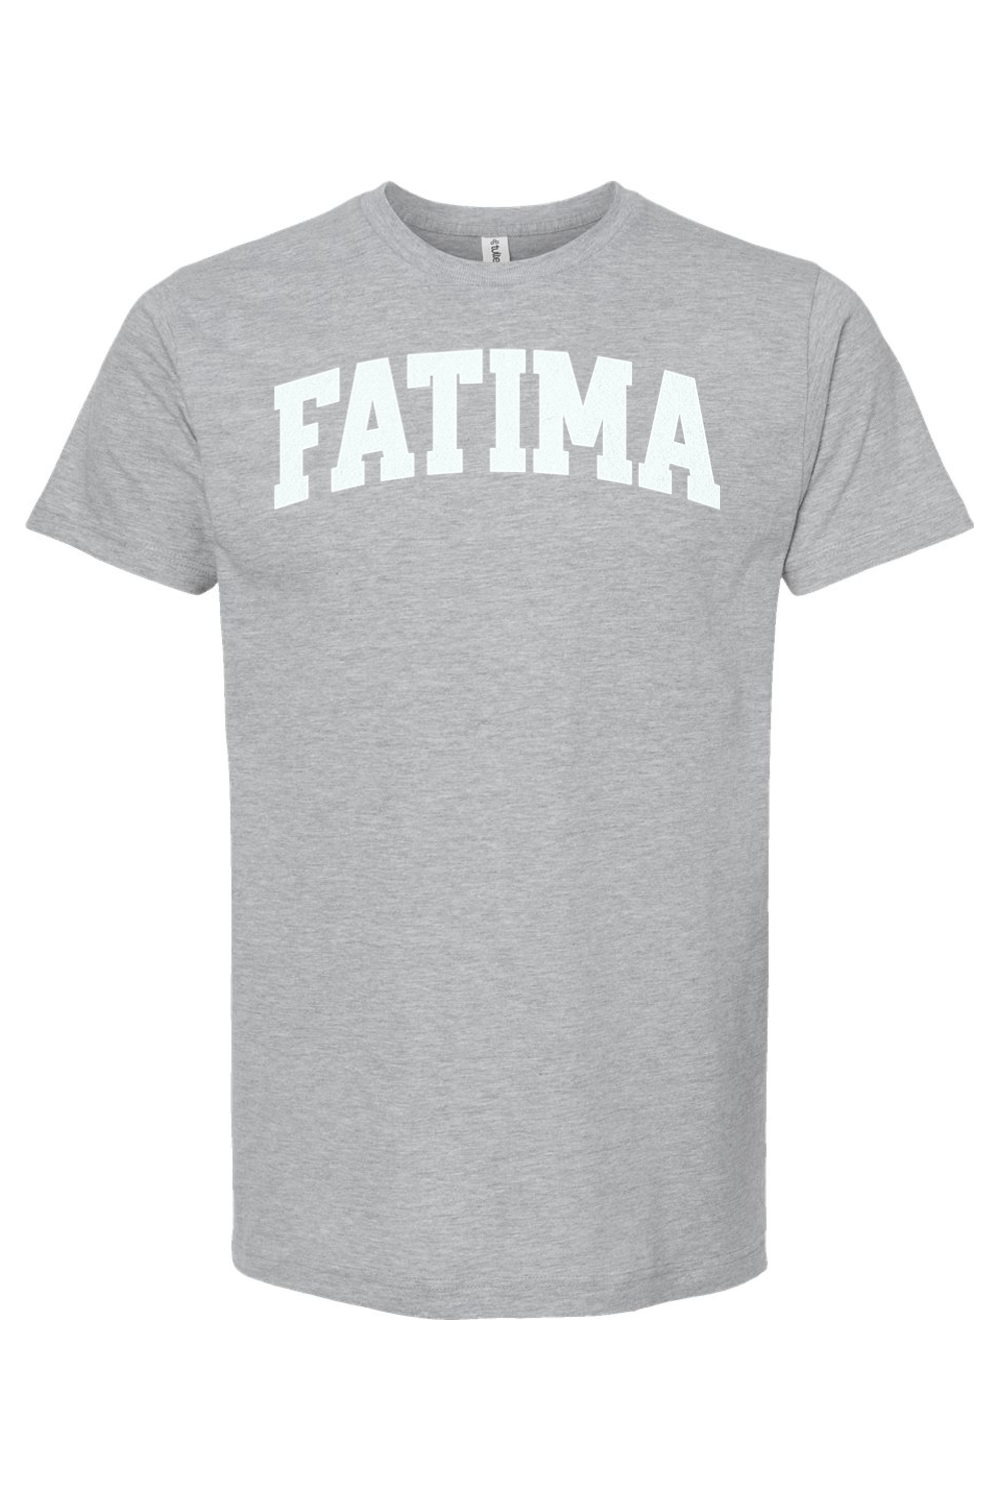 Fatima - Collegiate